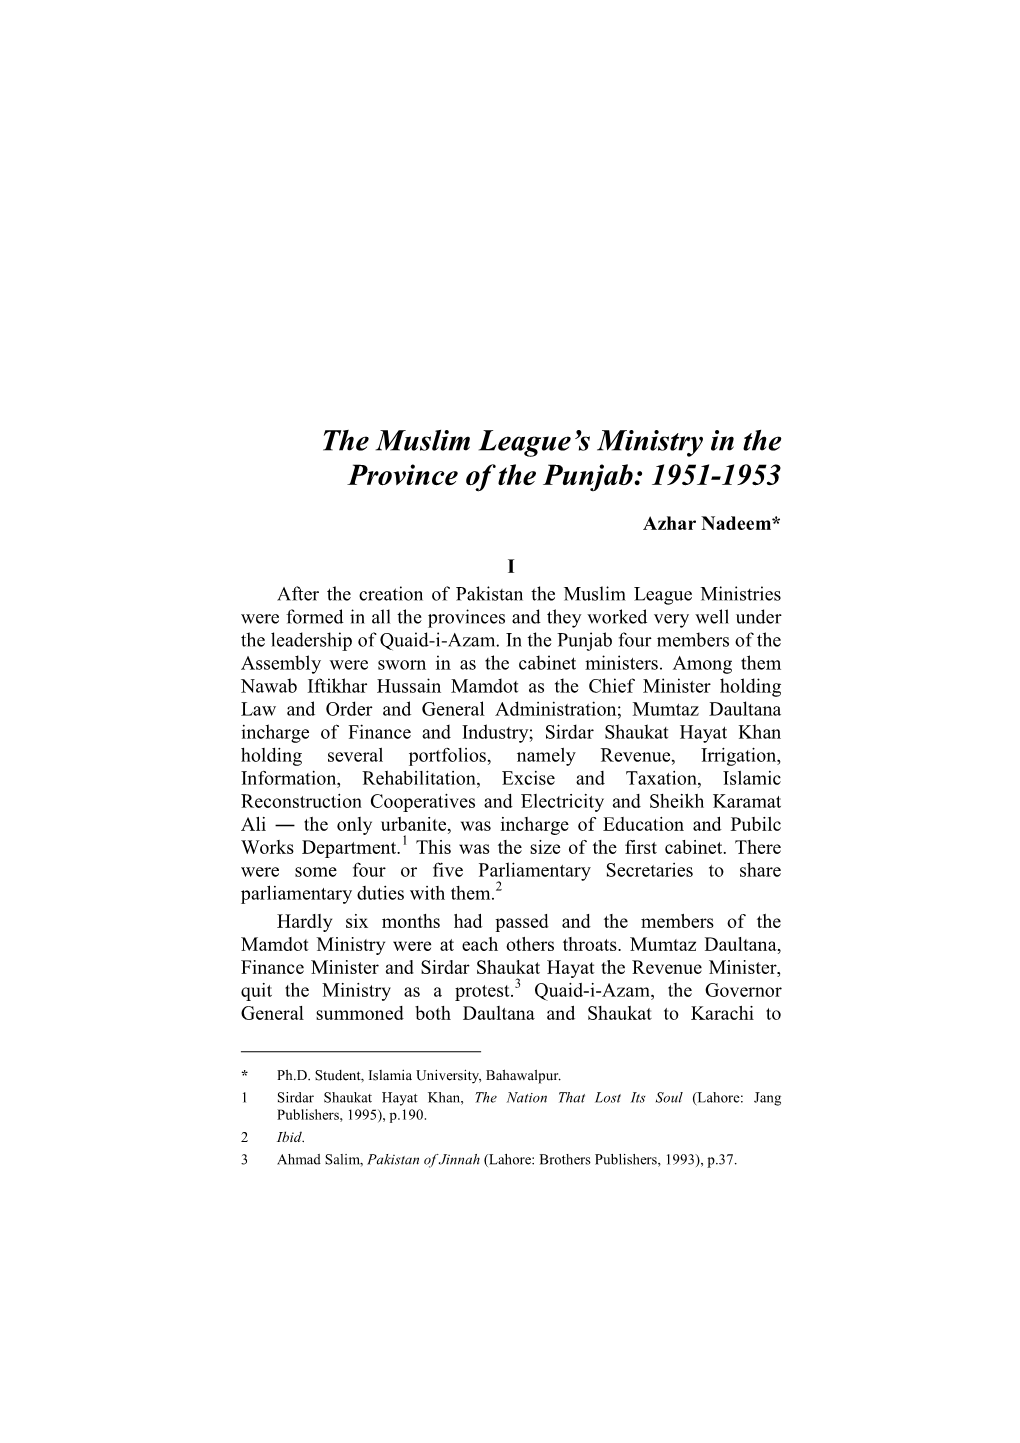 5. the Muslim League's Ministry, Major Nadeem